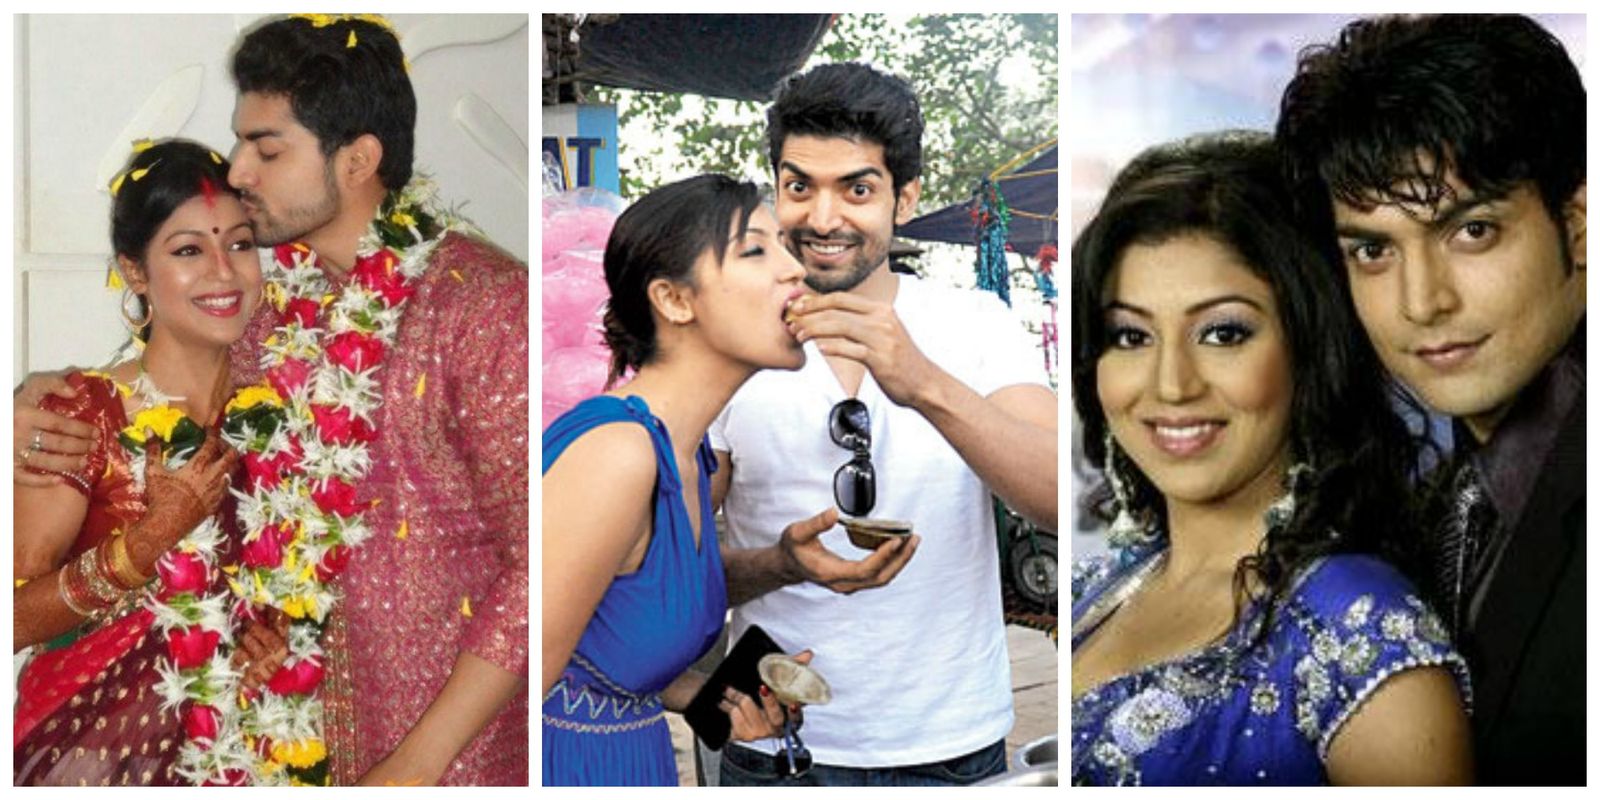 In Pictures: The Love Story Of TV's Ram- Sita, Gurmeet Choudhary And Debina Bonnerjee!